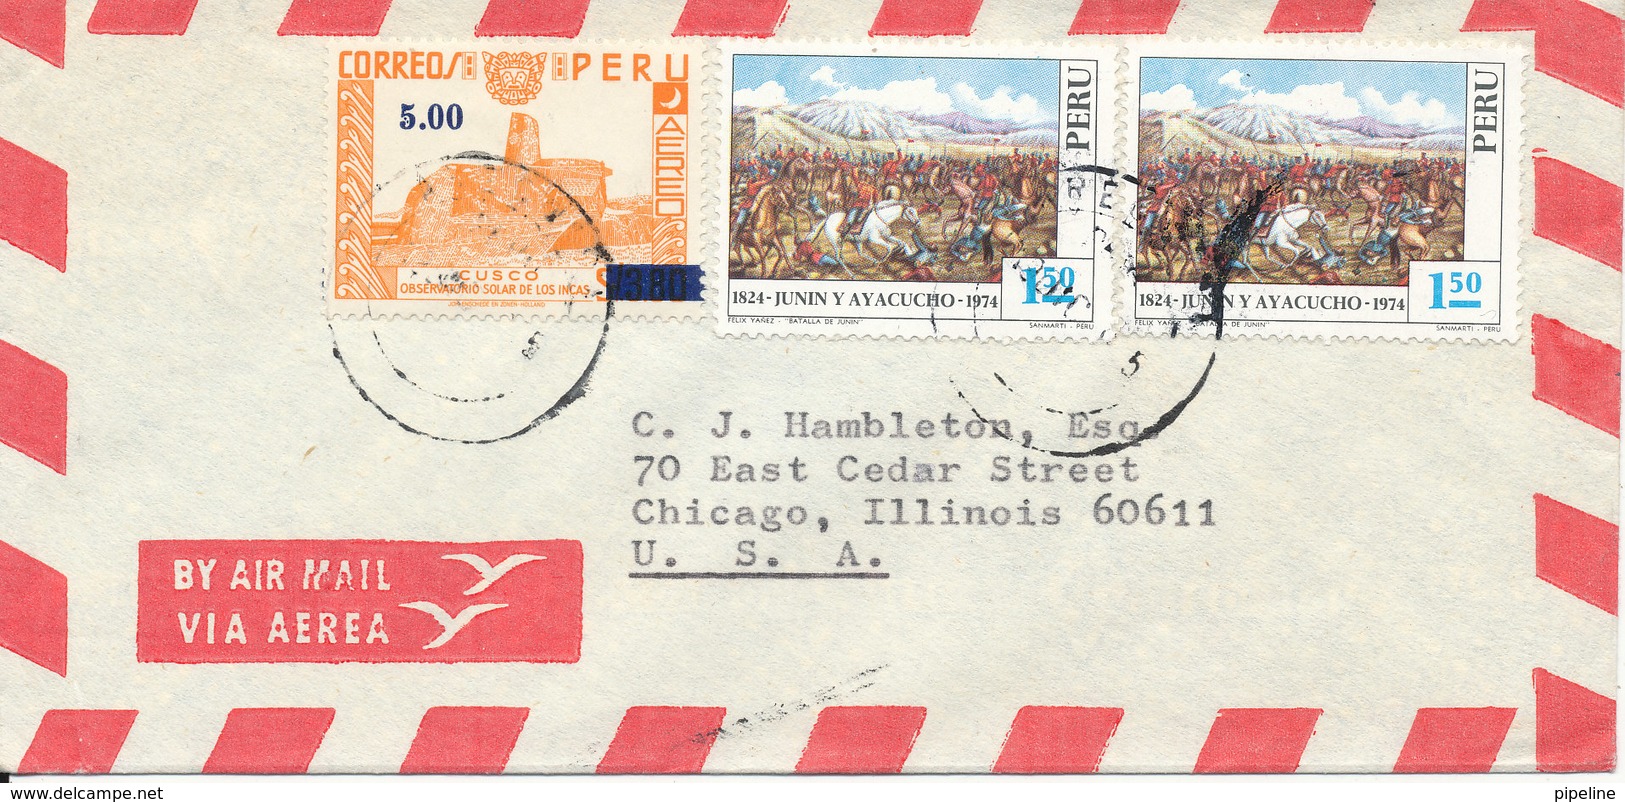 Peru Air Mail Cover Sent To USA - Peru